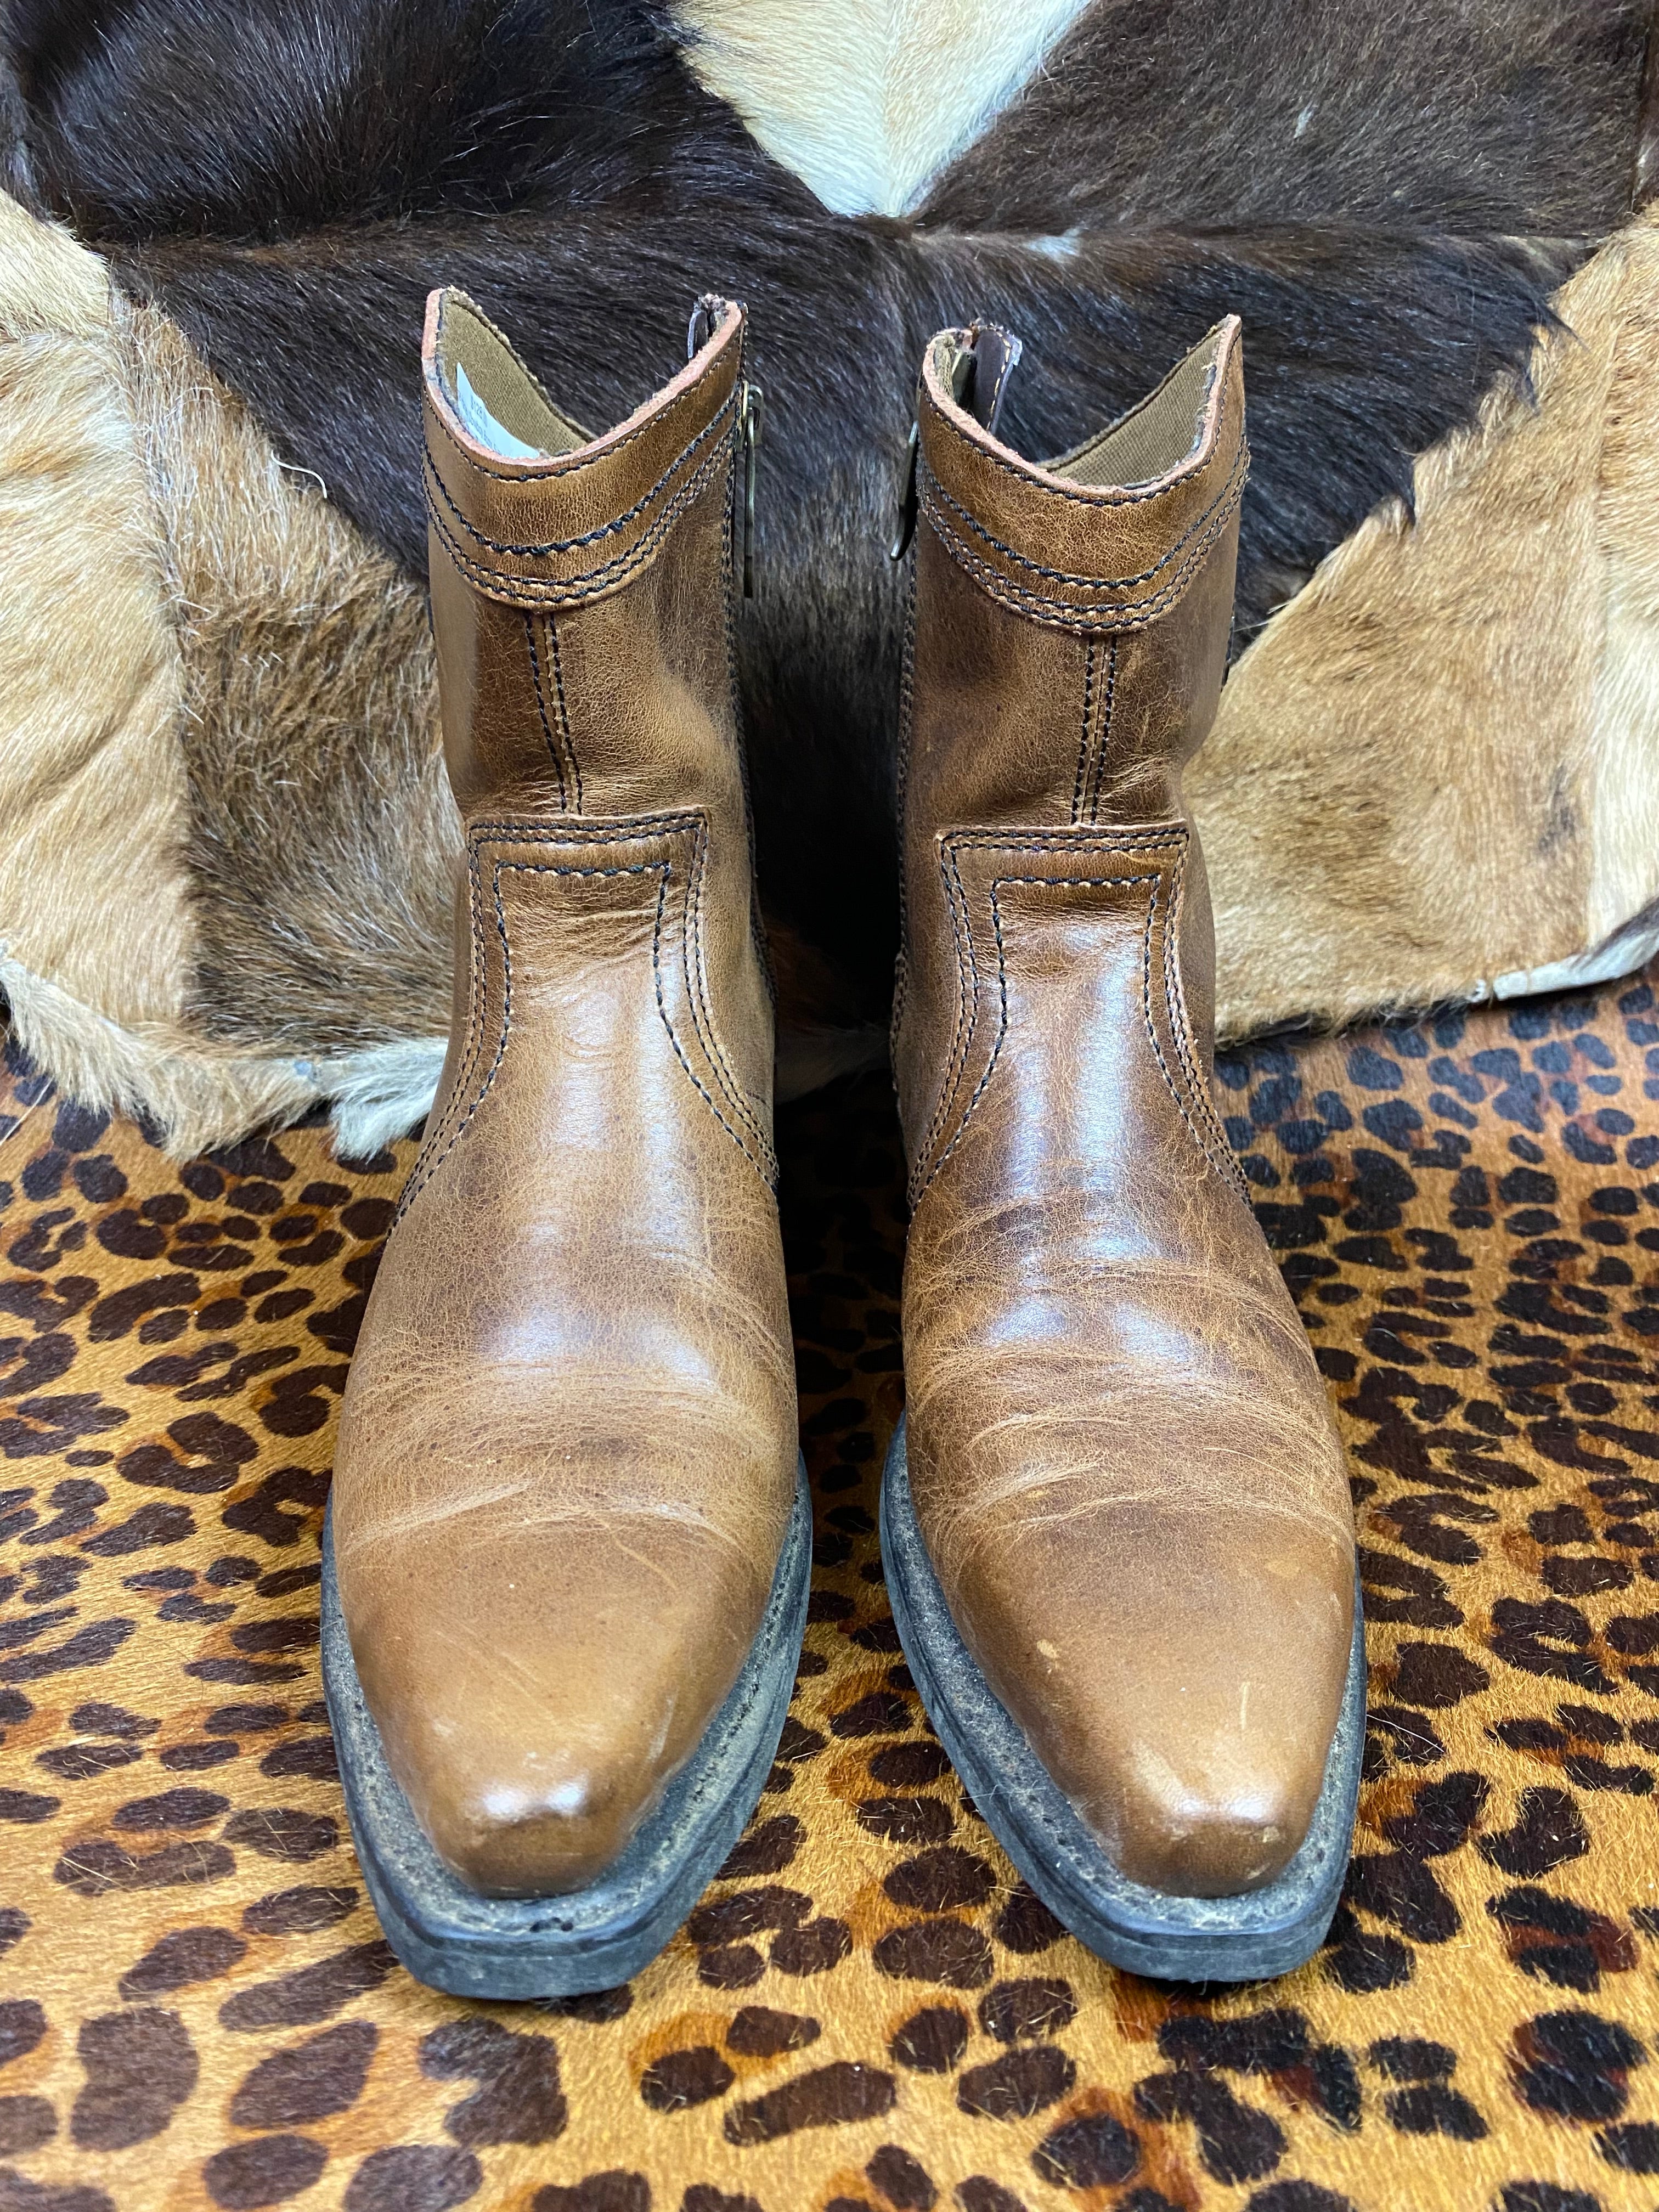 Vintage Harley Cowboy Boots Size 8 Brown